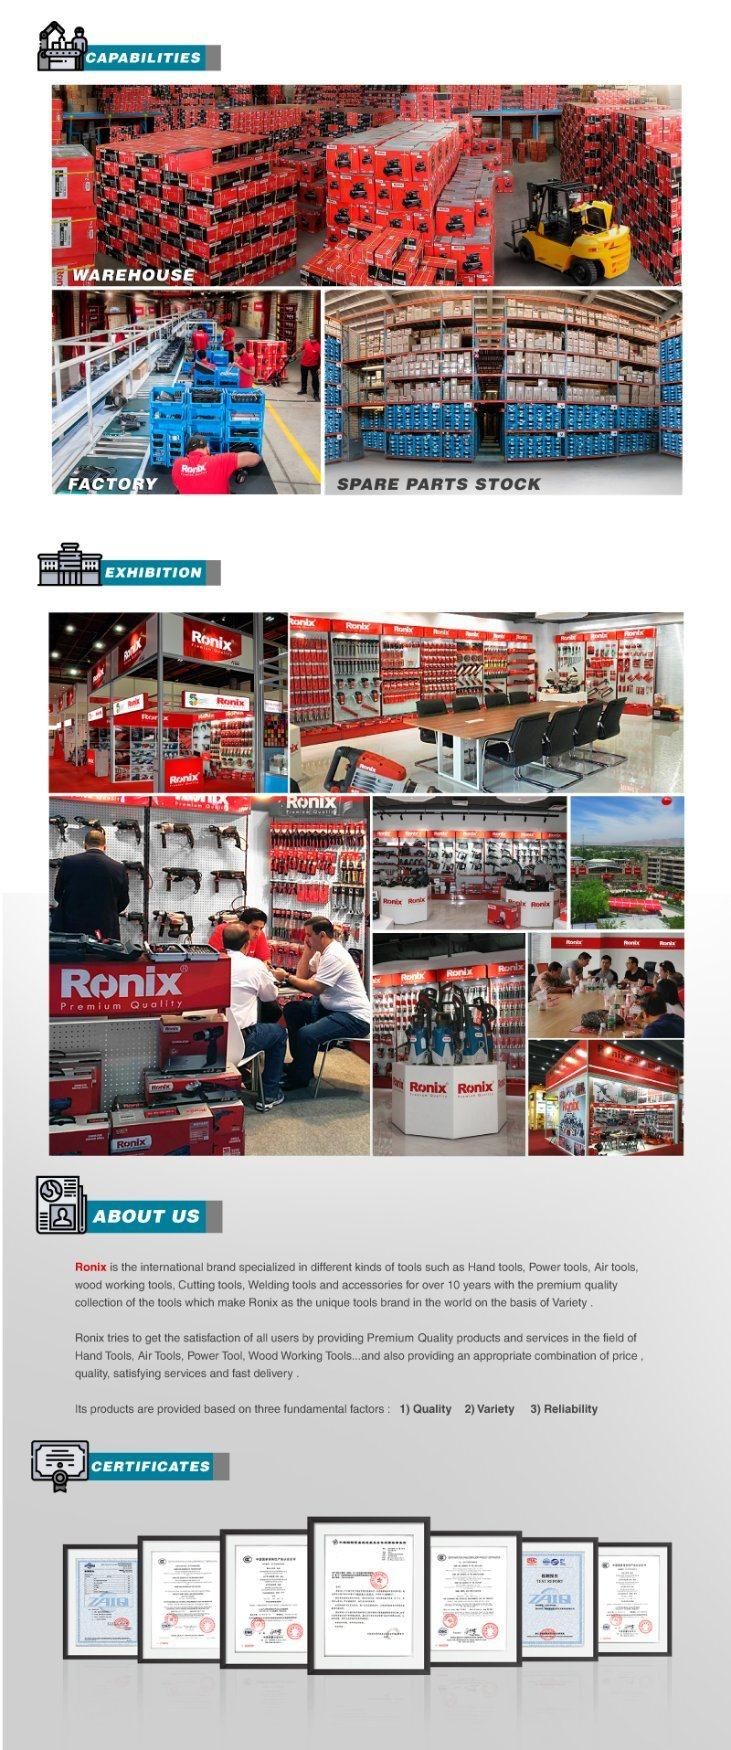 Ronix Model Rh-2716 63PCS CRV Steel Precision Screwdriver Bit Set Screw Driver Set